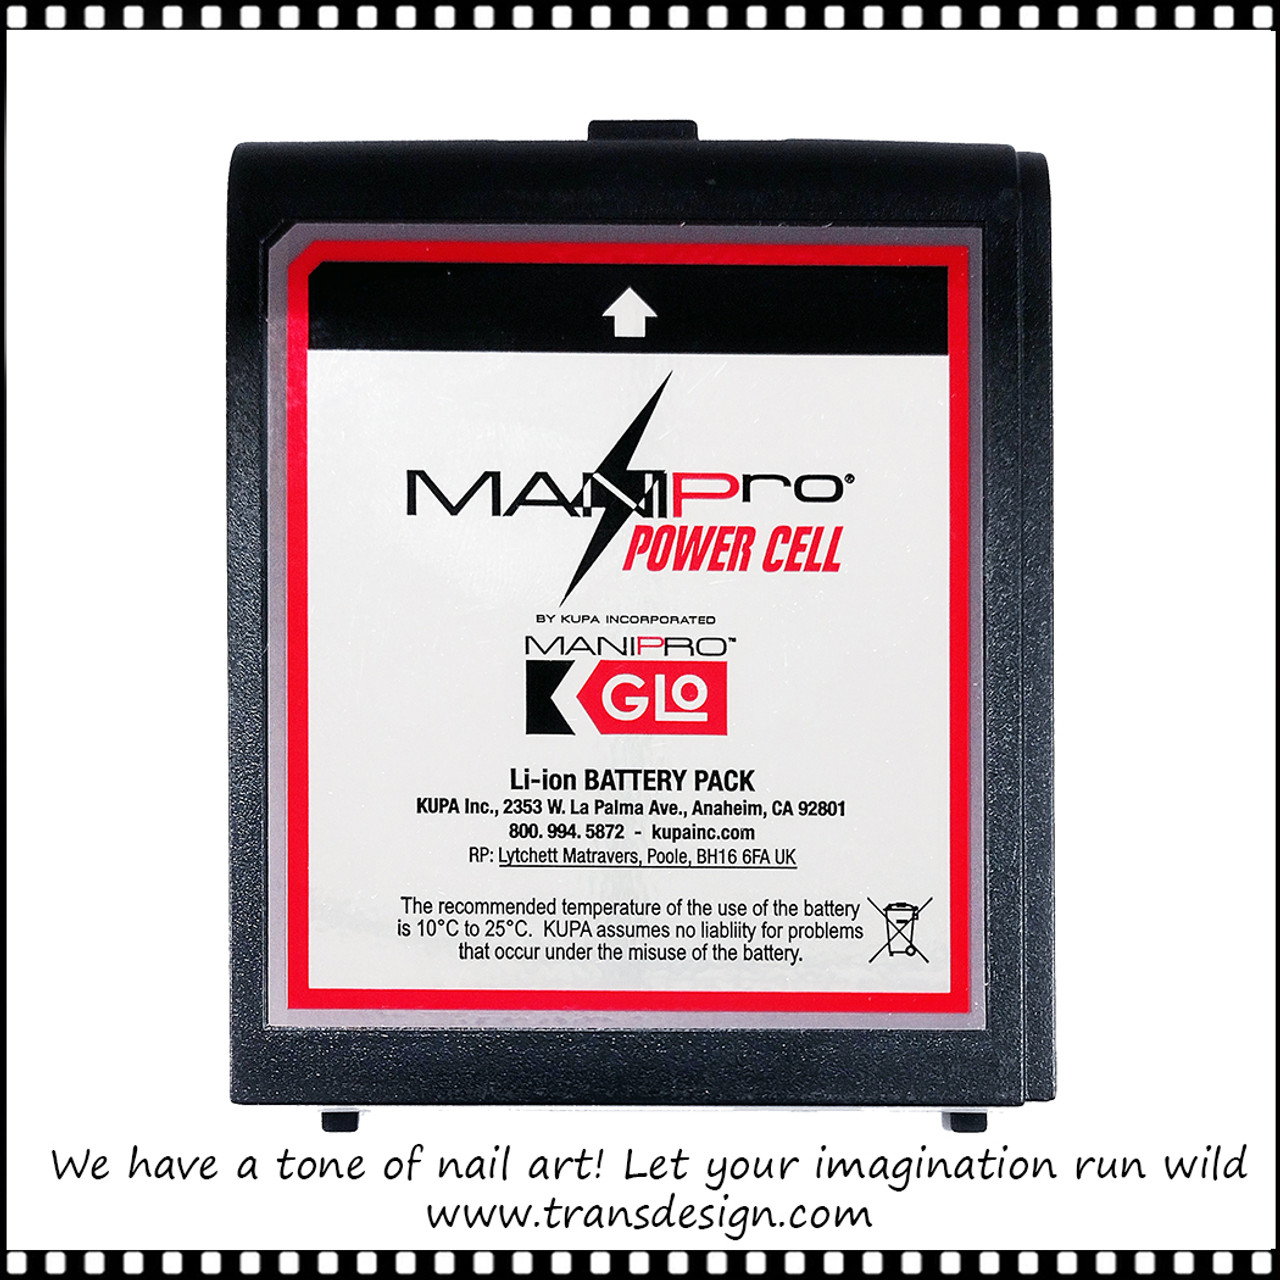 KUPA MANI Pro Glo Lamp Power Cell Battery Pack